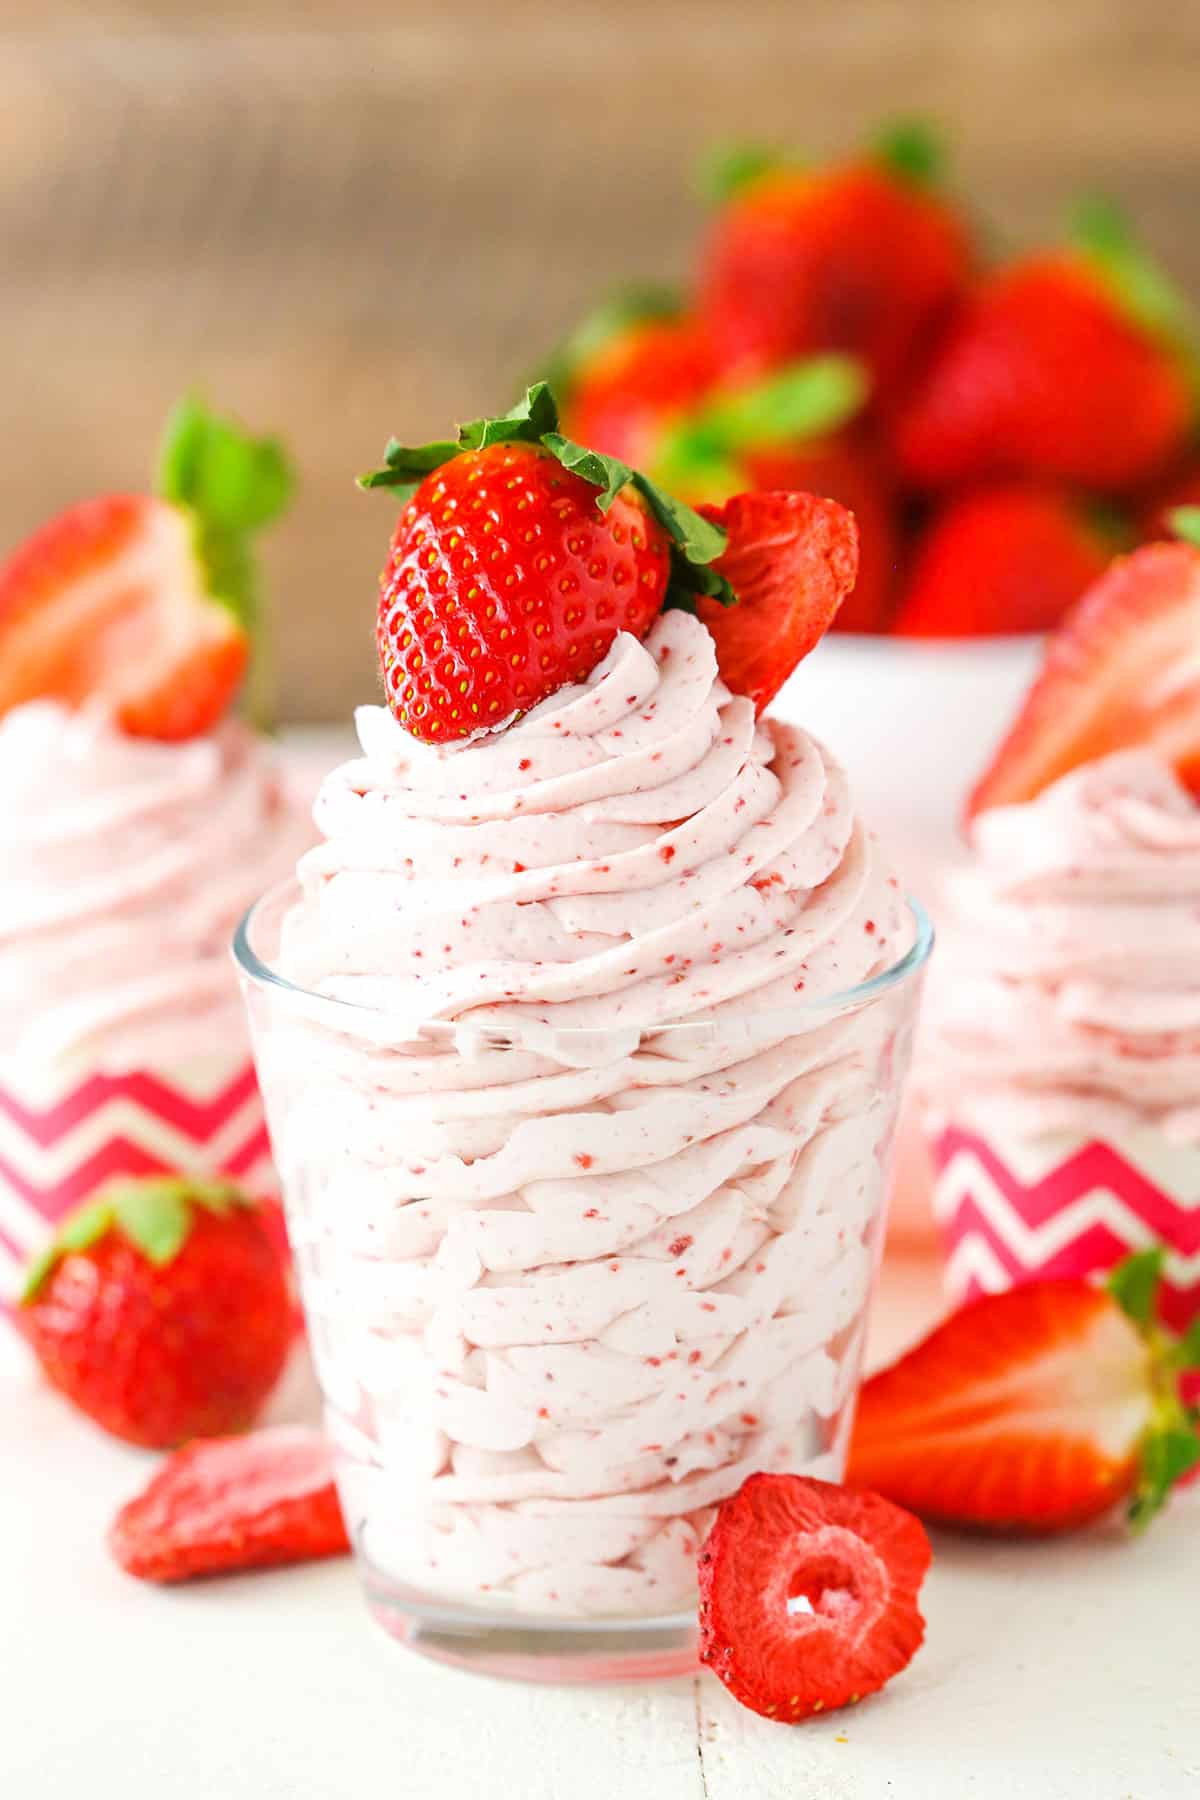 Homemade Strawberry Whipped Cream Recipe Made 2 Ways!